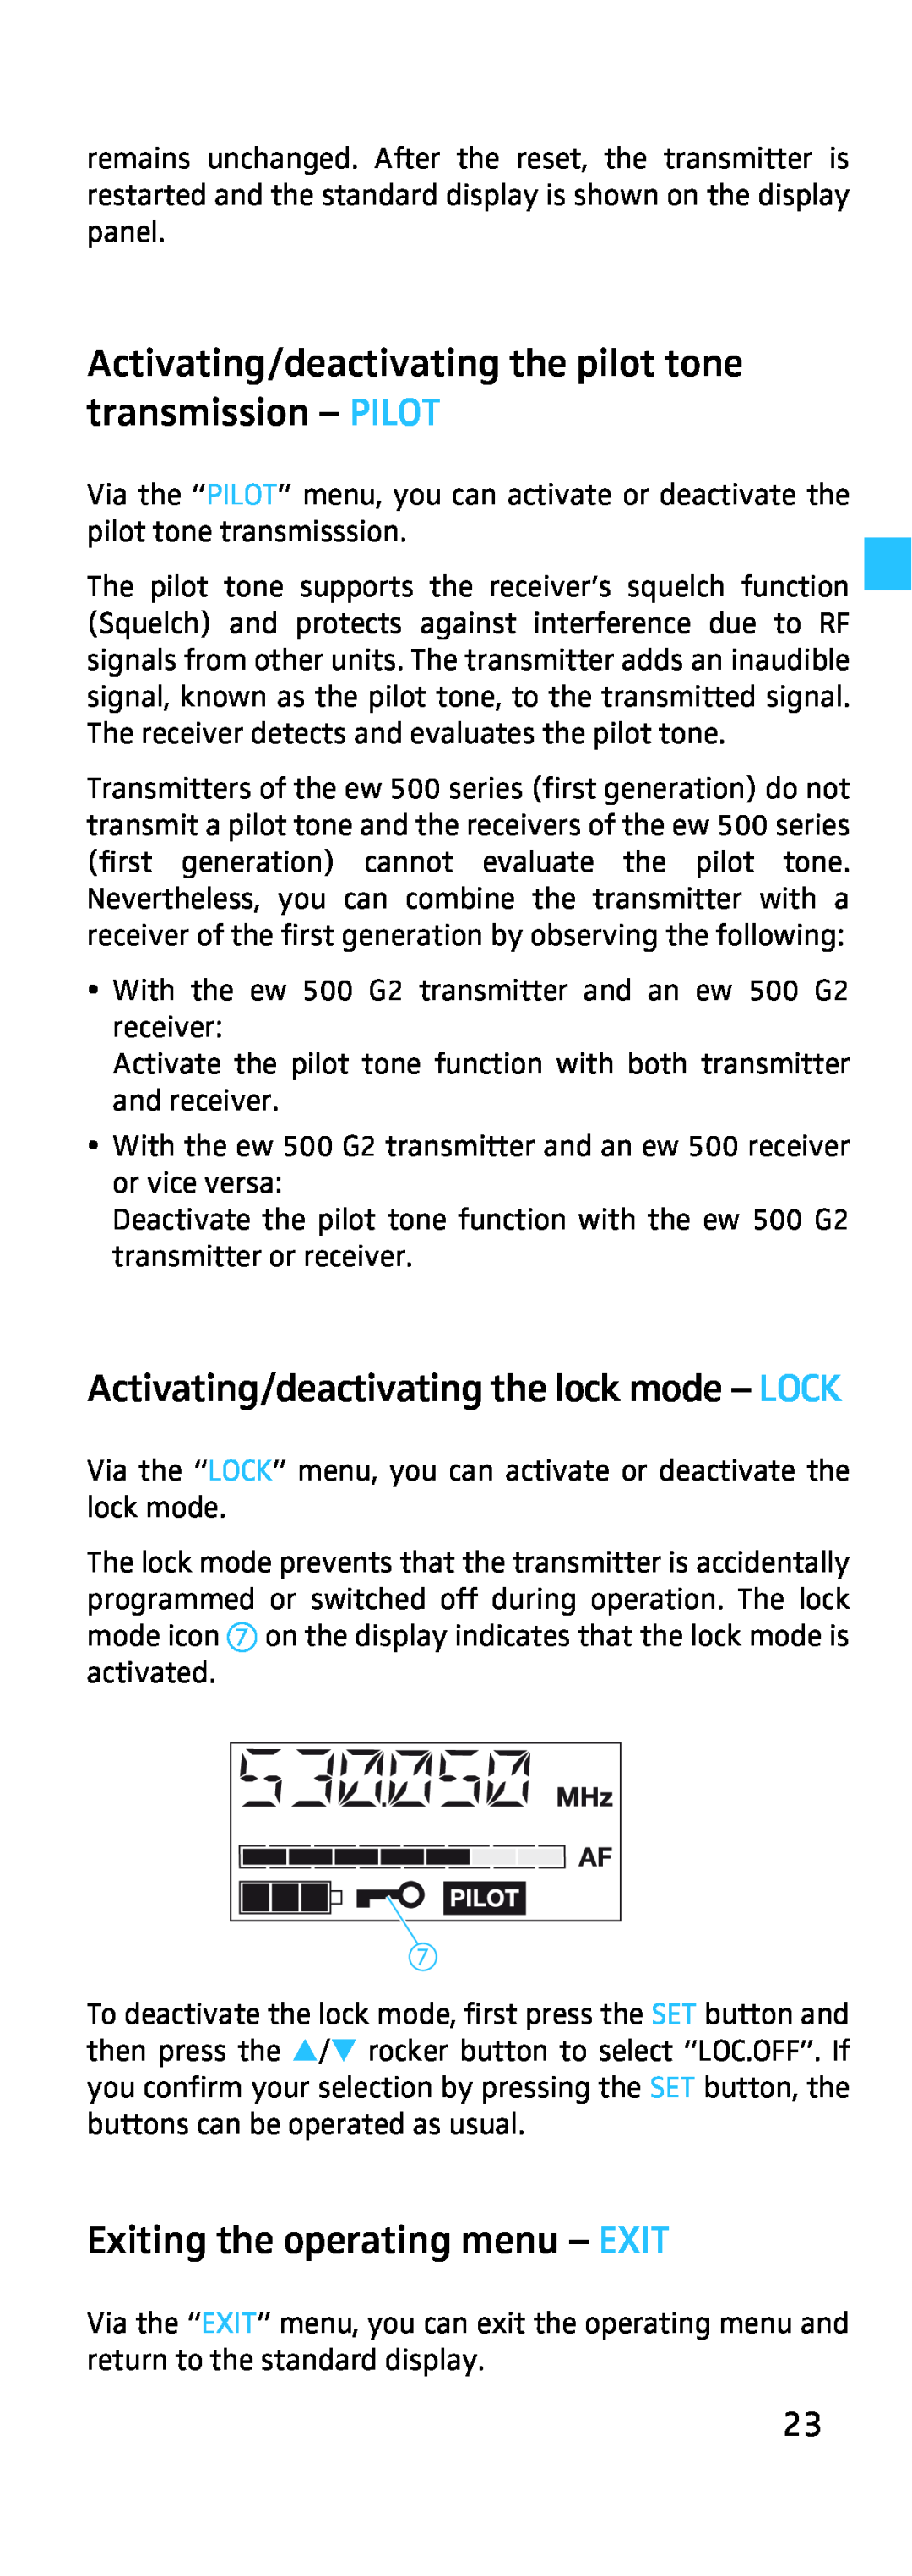 Sennheiser EK 500, SK 500 manual Activating/deactivating the lock mode - LOCK, Exiting the operating menu - EXIT 